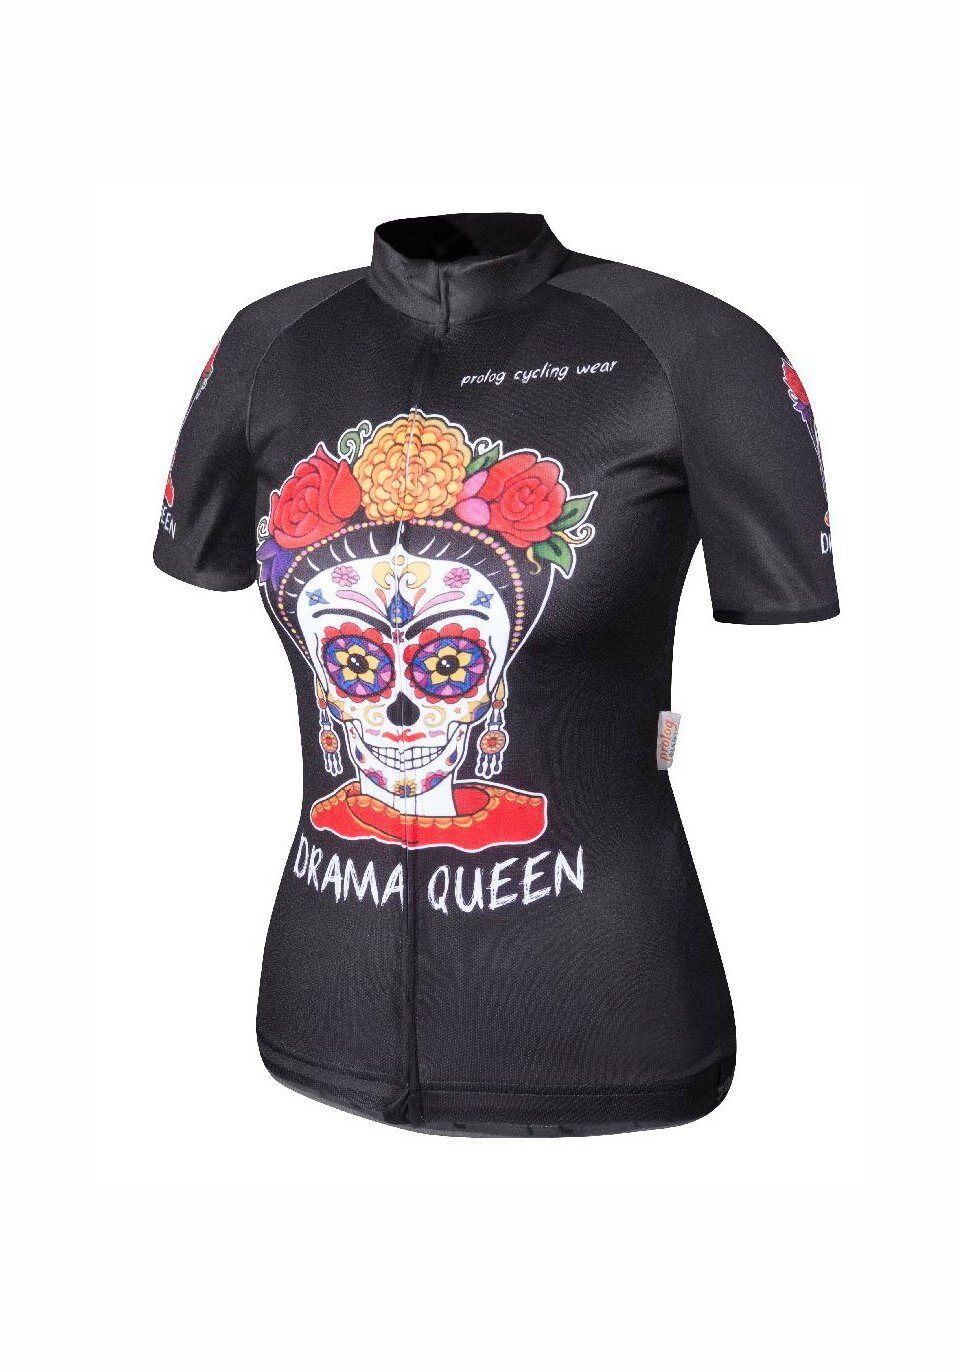 prolog cycling wear Trikot »Drama Queen« mit coolem Frontdruck